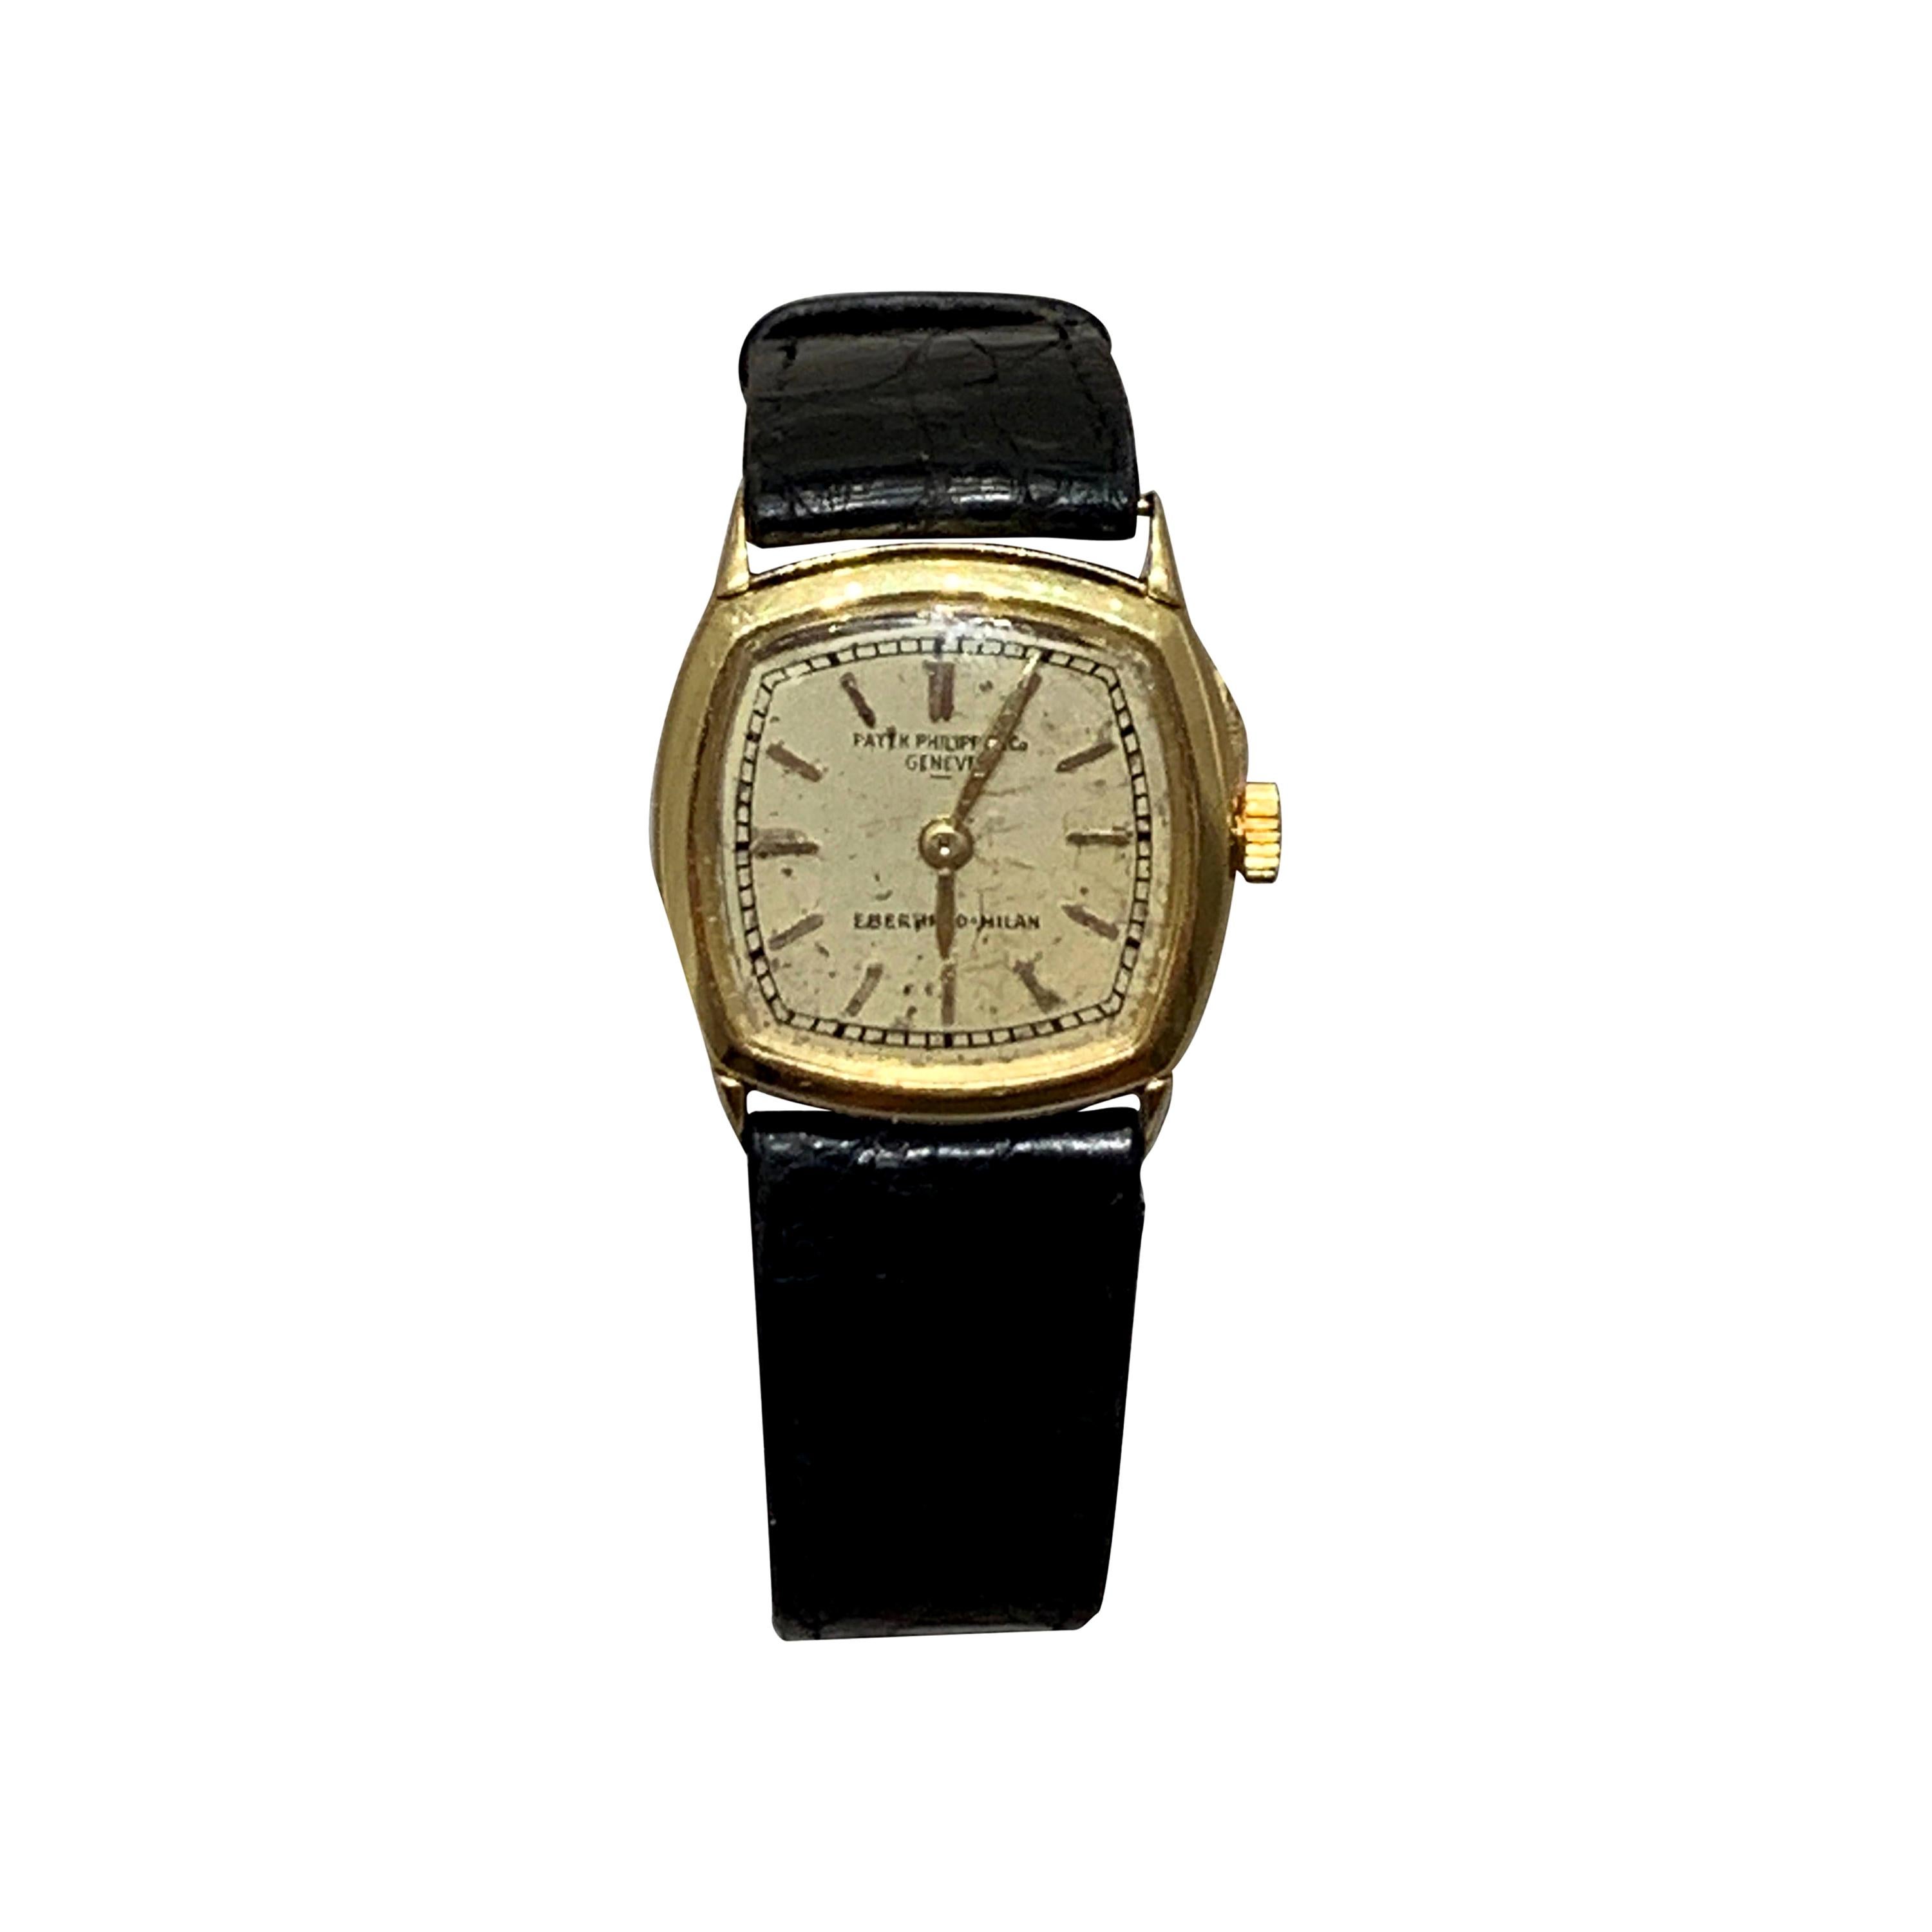 Certified Rare 1920 Patek Philippe Ladies Eberhard Milan Watch